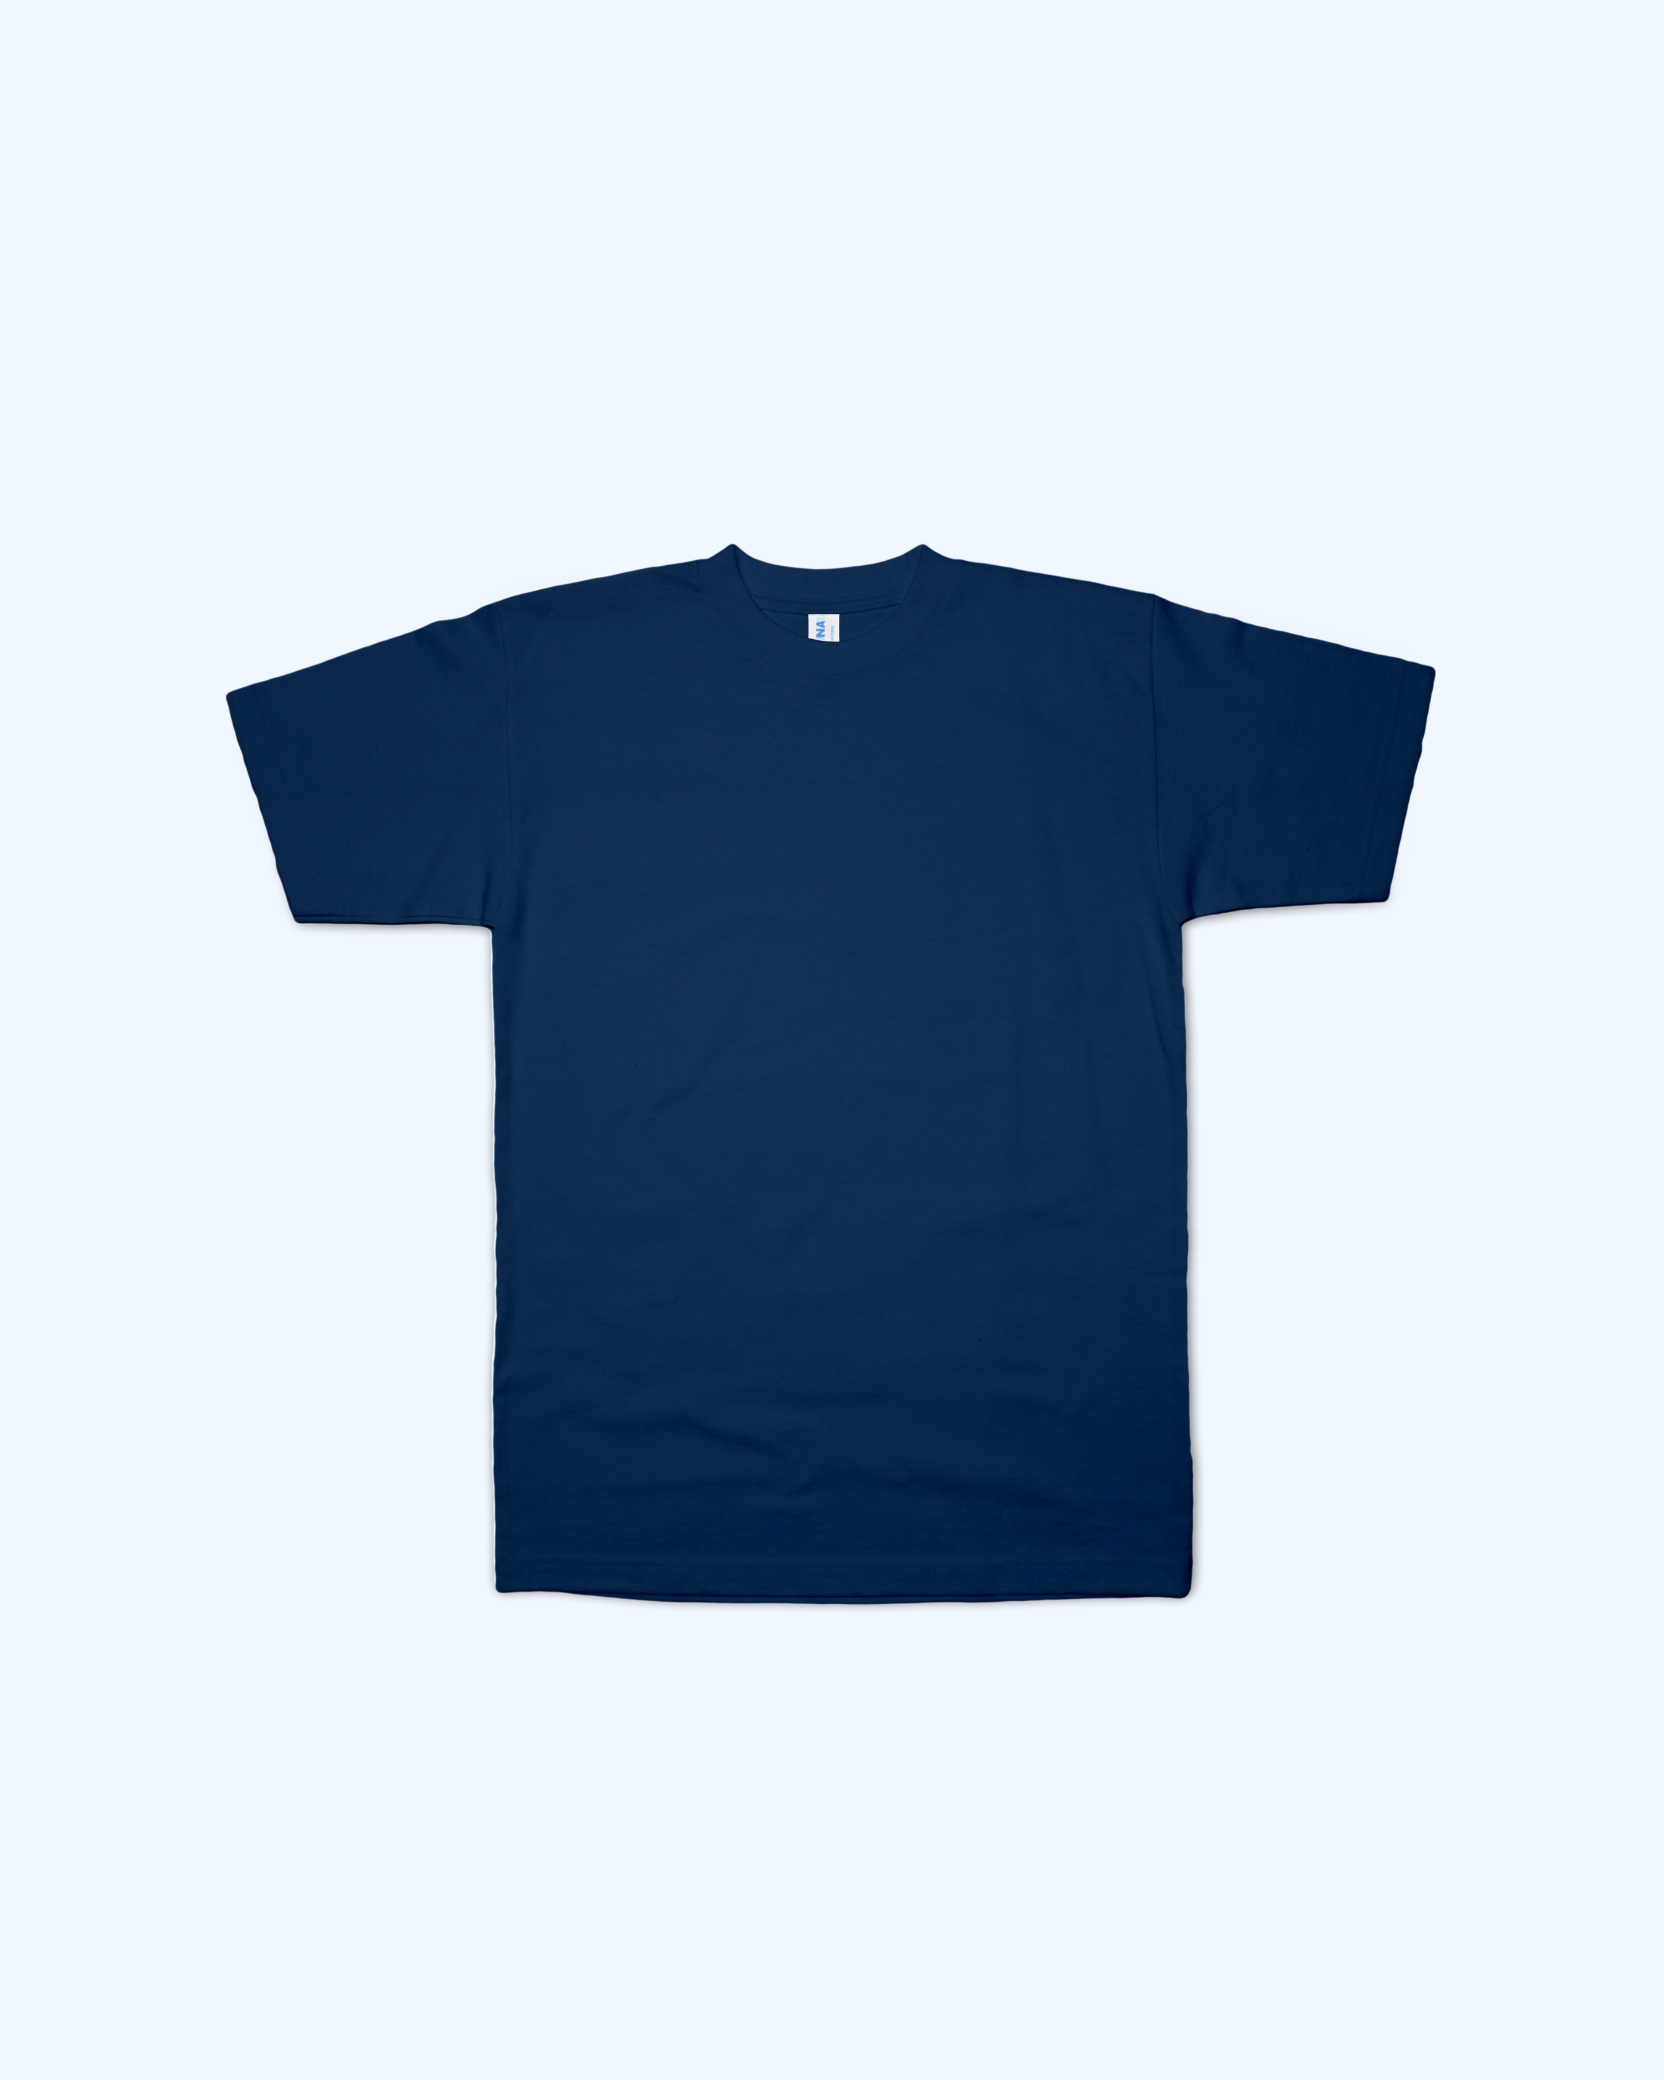 Adult Navy Blue short sleeve t-shirt